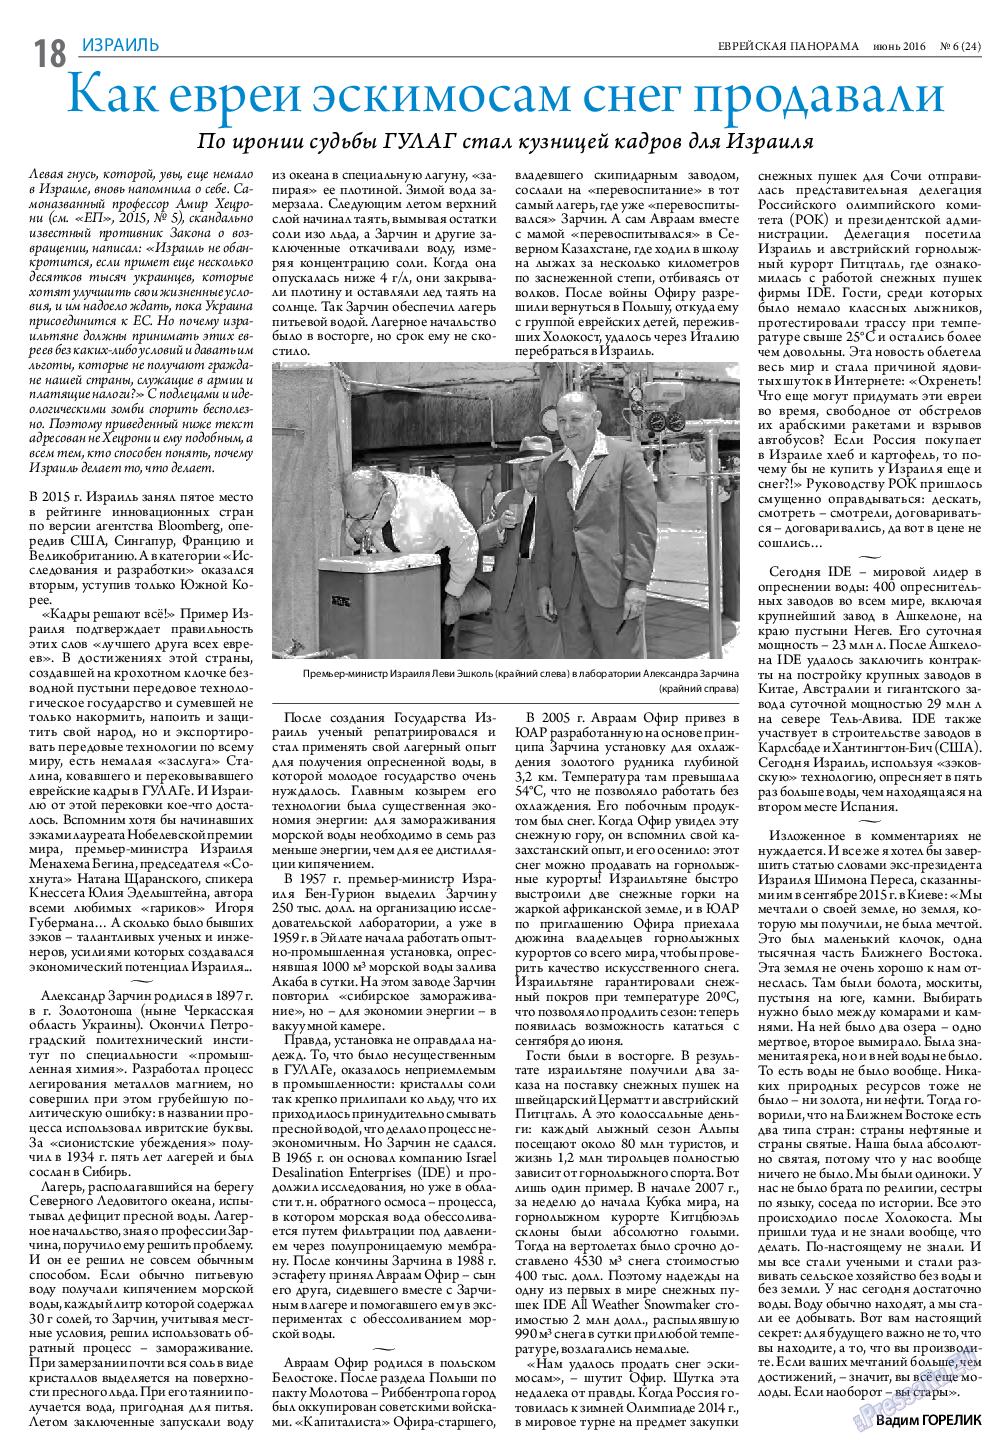 Еврейская панорама, газета. 2016 №6 стр.18